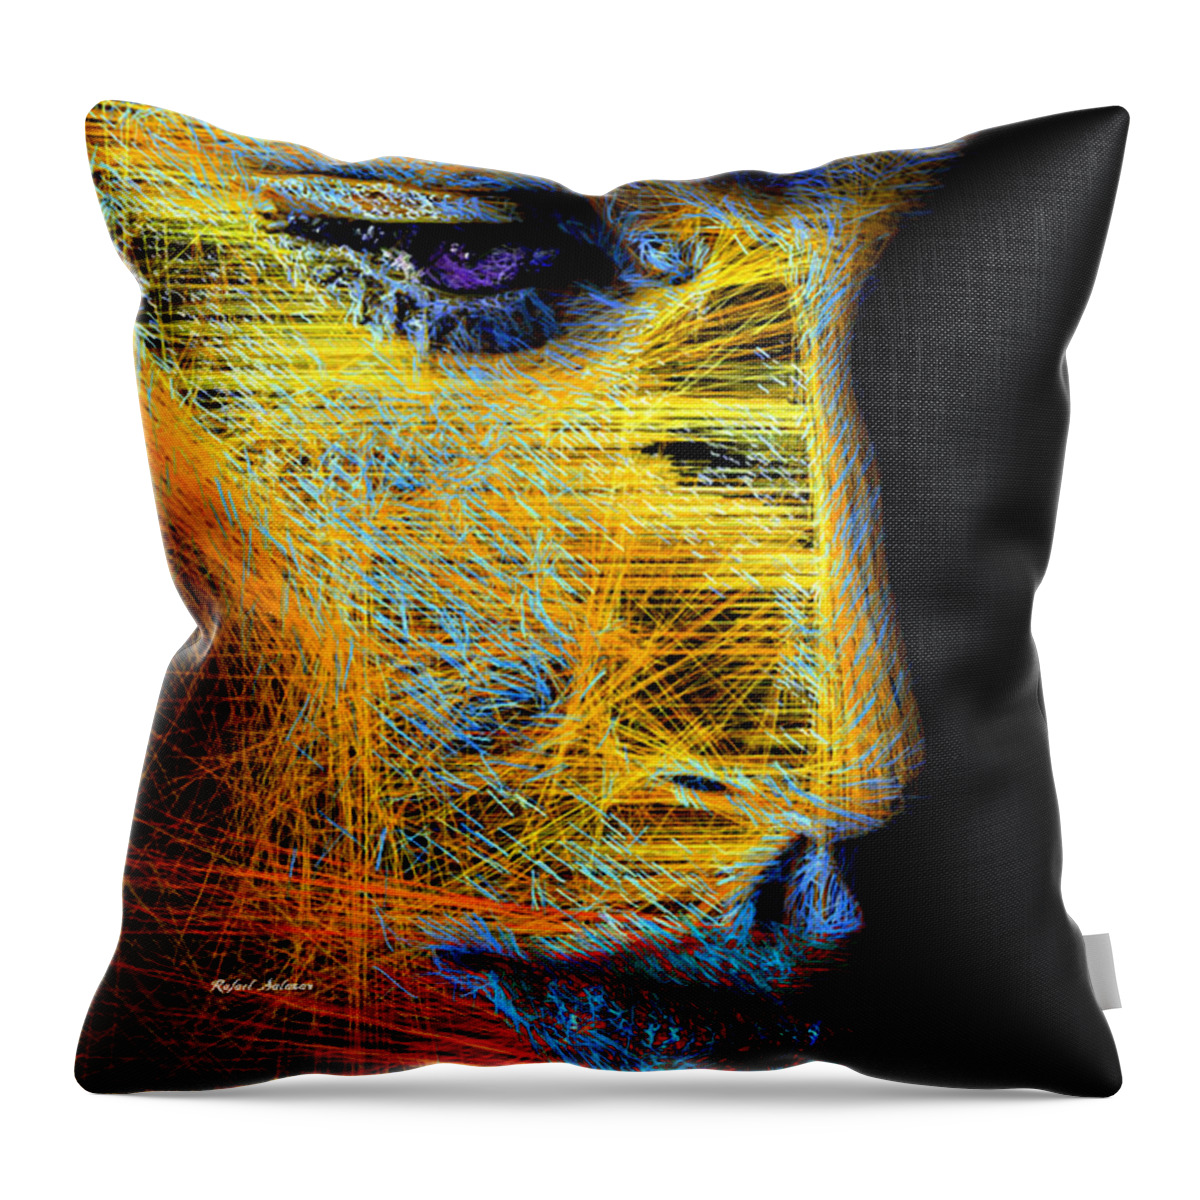 Rafael Salazar Throw Pillow featuring the digital art Mystery by Rafael Salazar